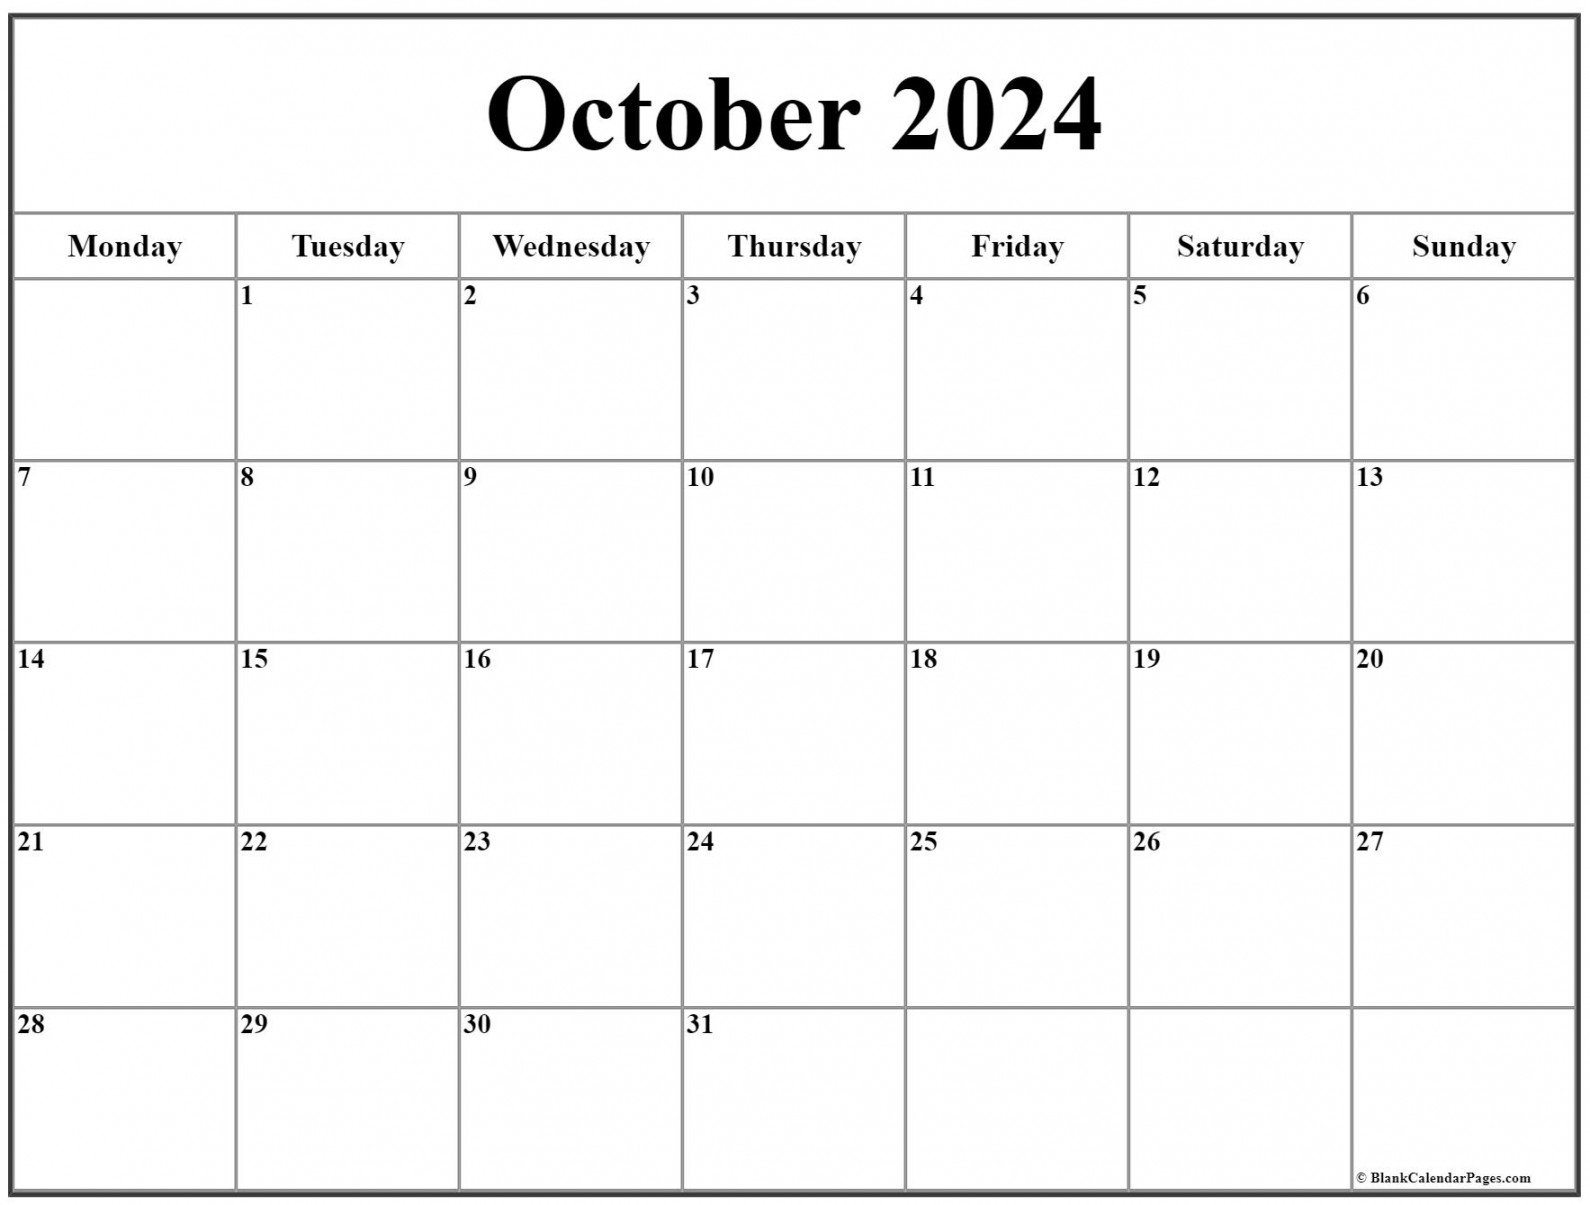 october monday calendar monday to sunday 0